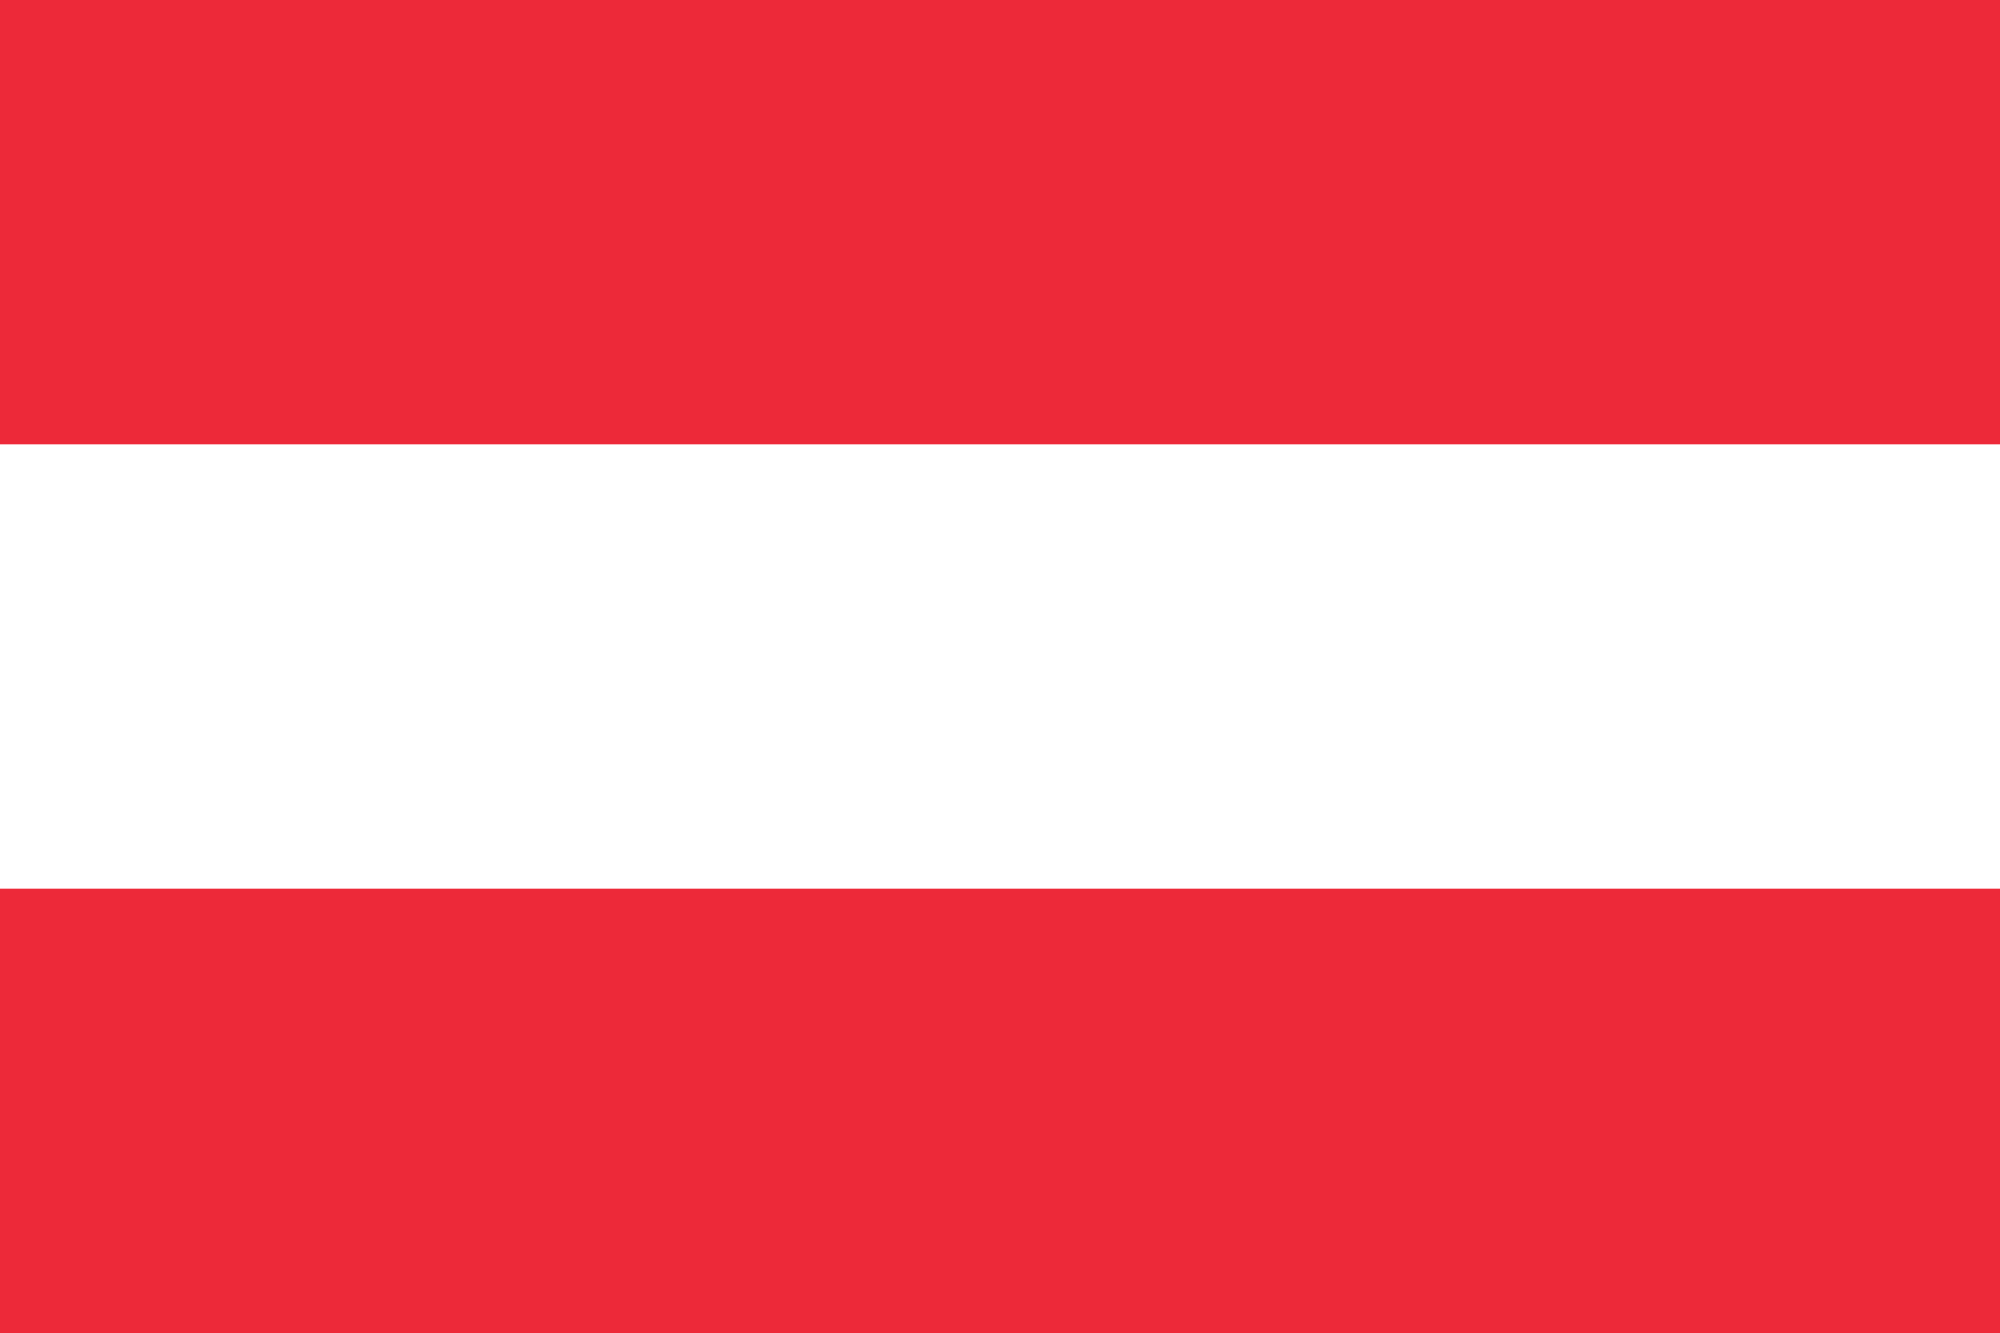 https://upload.wikimedia.org/wikipedia/commons/thumb/4/41/Flag_of_Austria.svg/2000px-Flag_of_Austria.svg.png